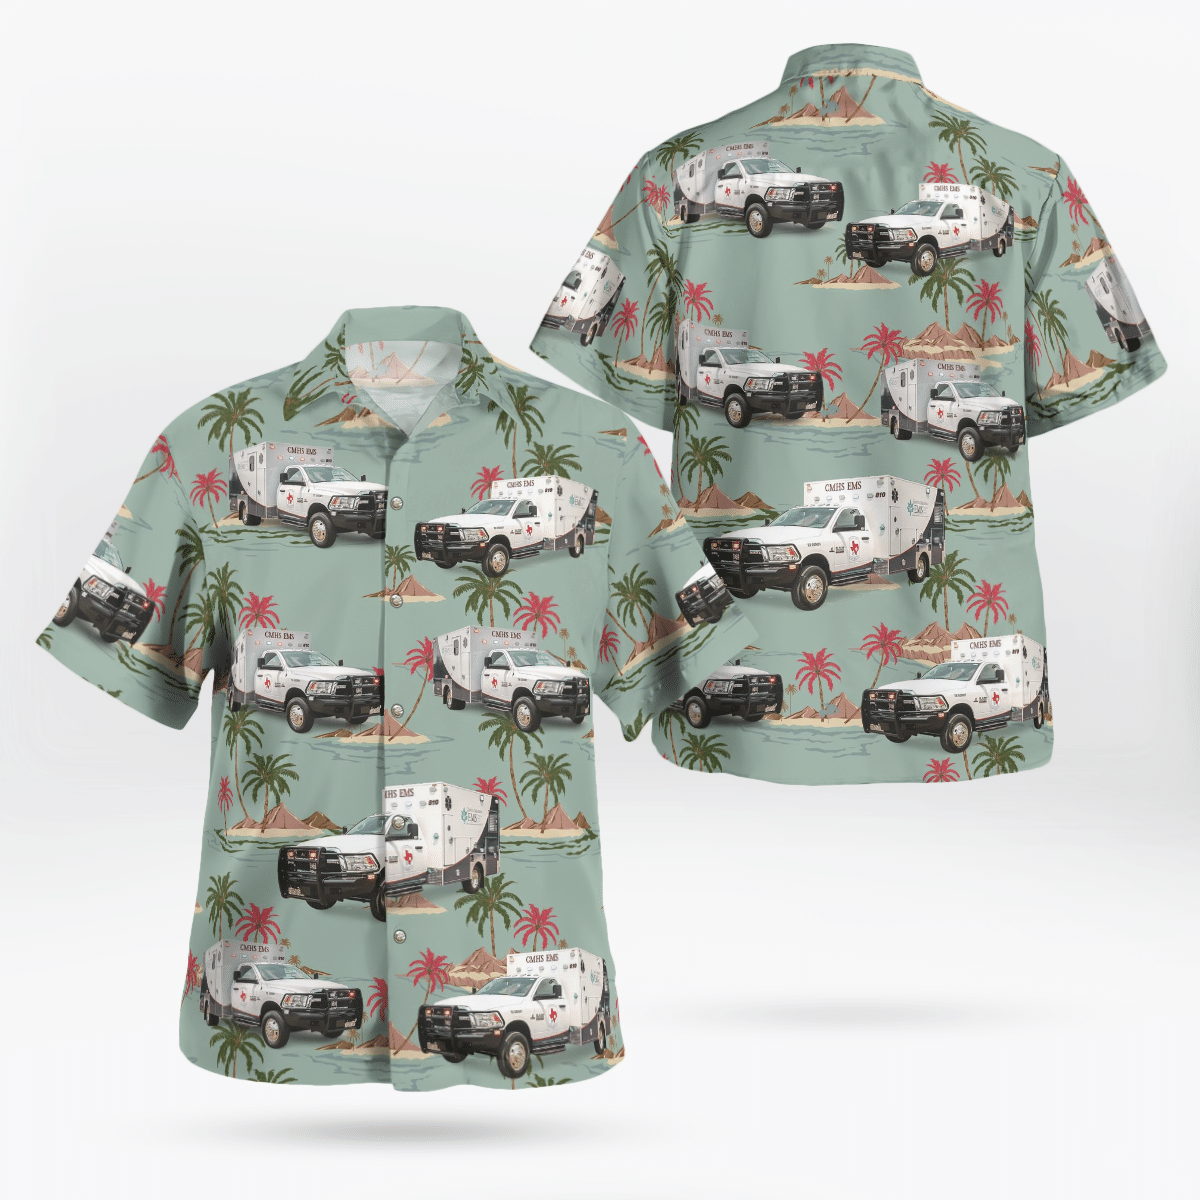 Why don't you order Hot Hawaiian Shirt today? 255